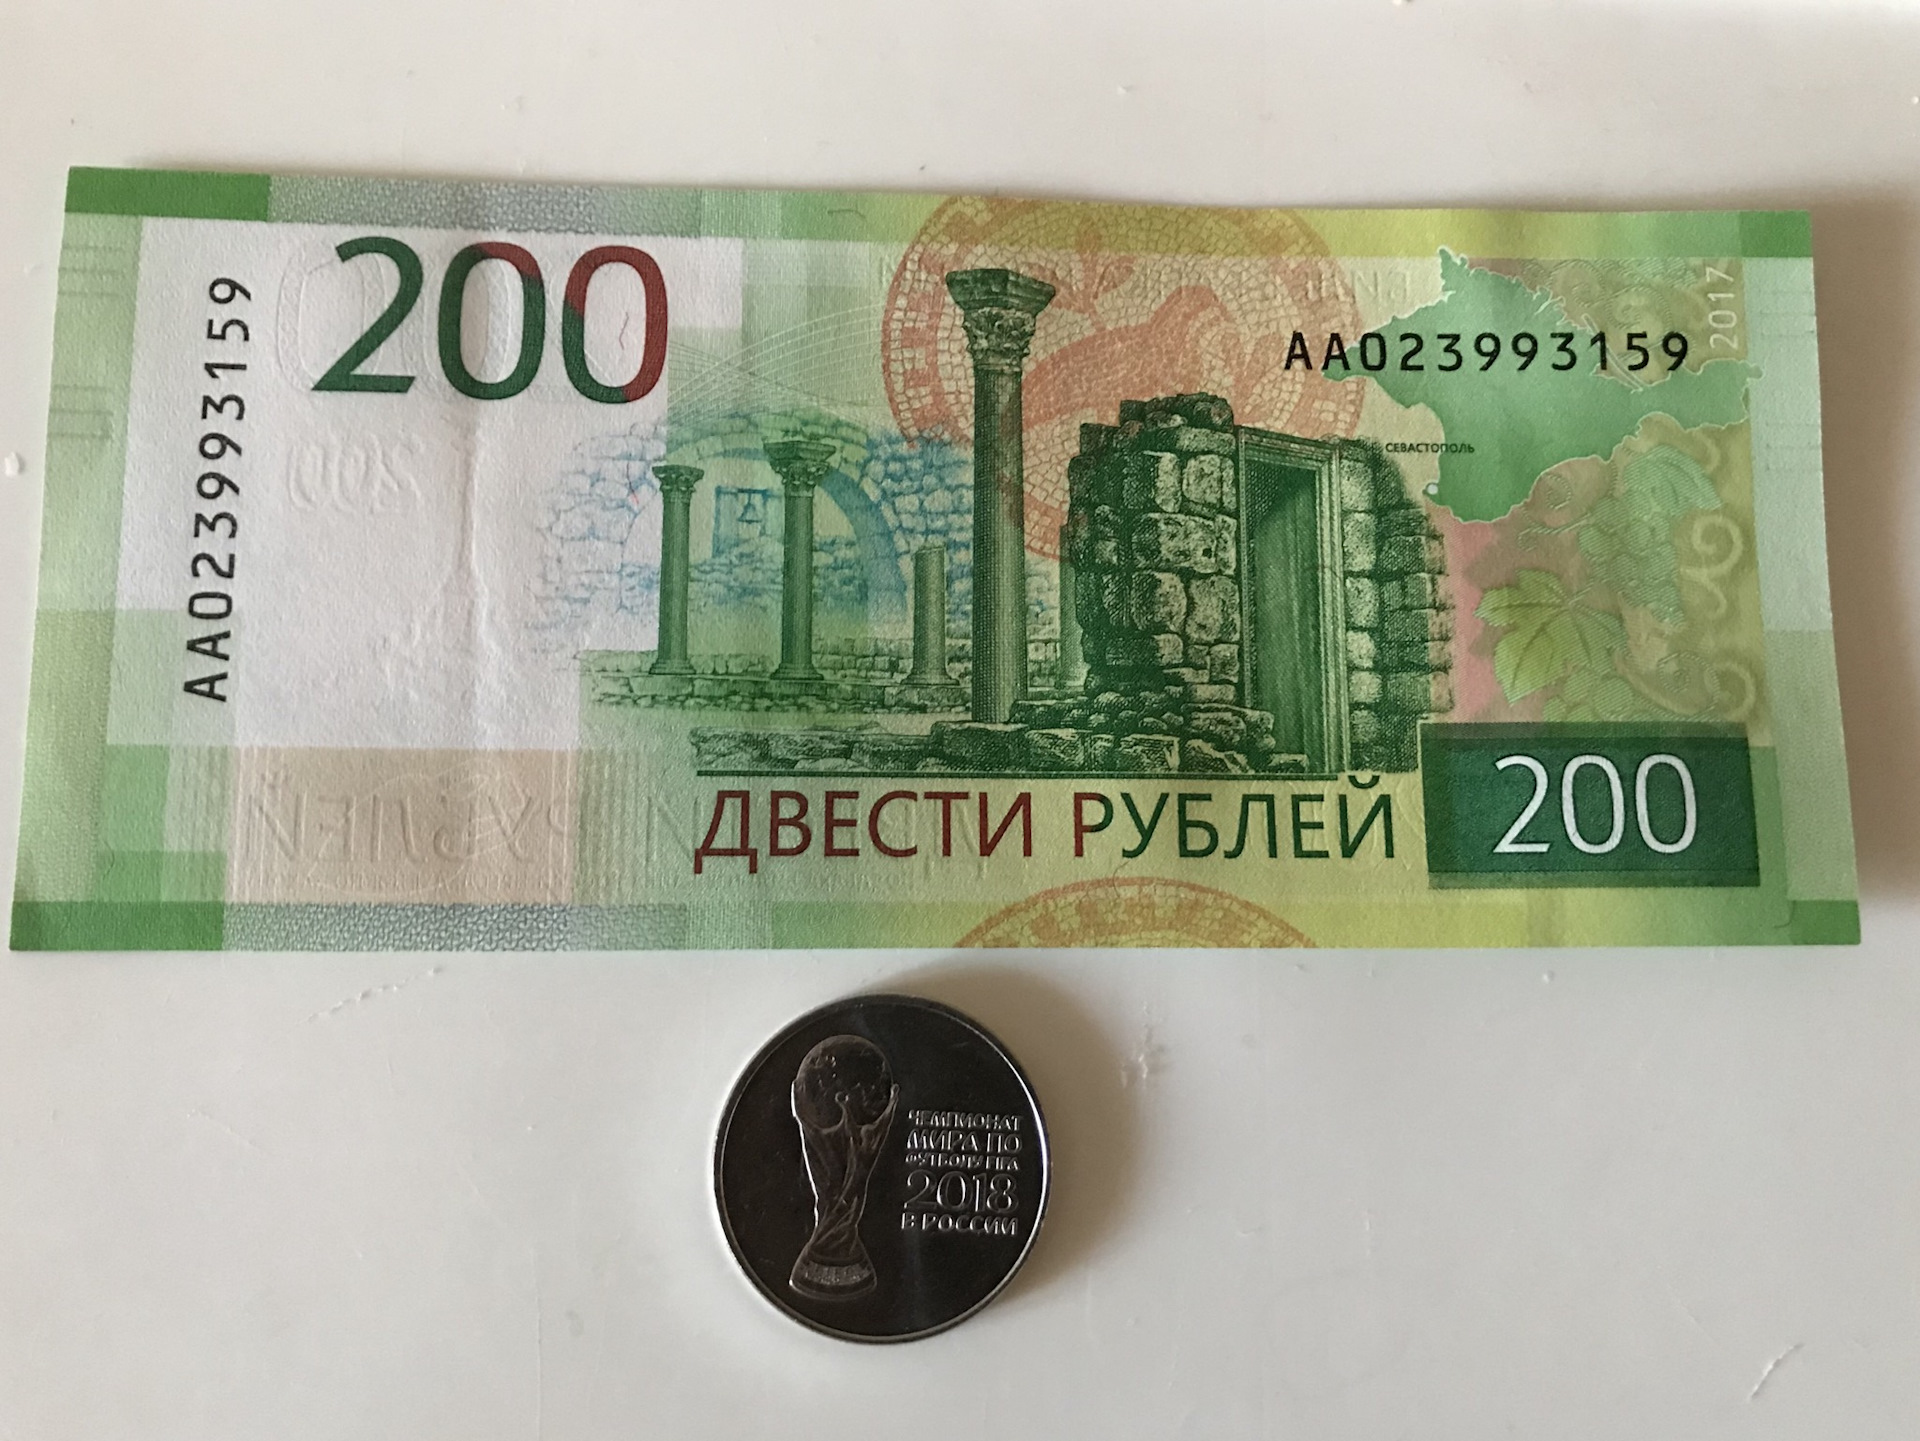 200 рублей 2019. 200 Рублей. 200 Рублей юбилейные. Двести рублей юбилейные. Памятные 200 руб.